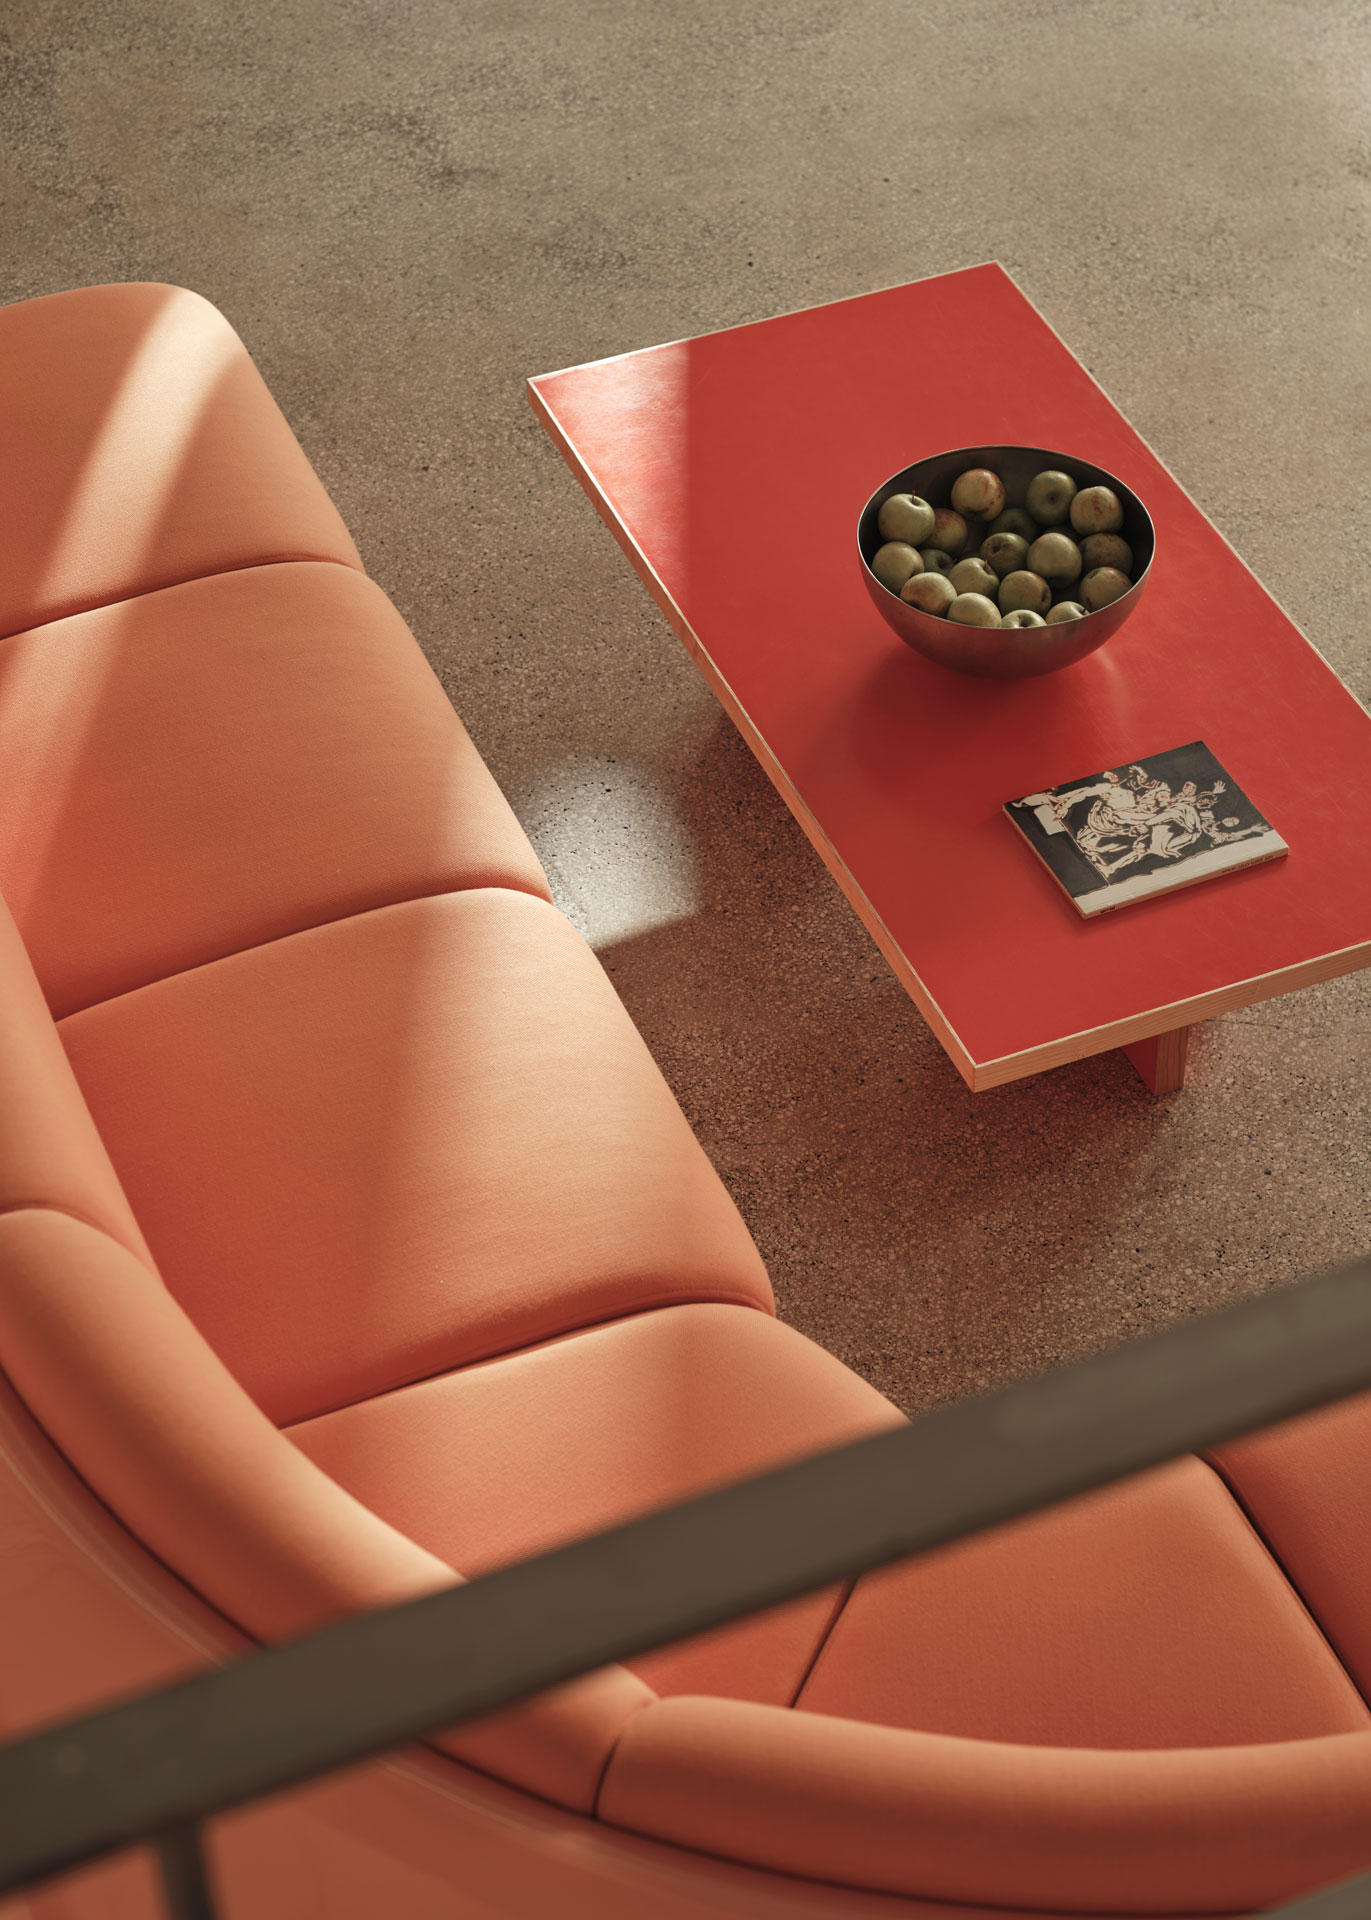 T4 Modular sofa  by Holloway Li for Uma; Bespoke Coffee tables by Holloway Li.
Photography by Felix Speller.